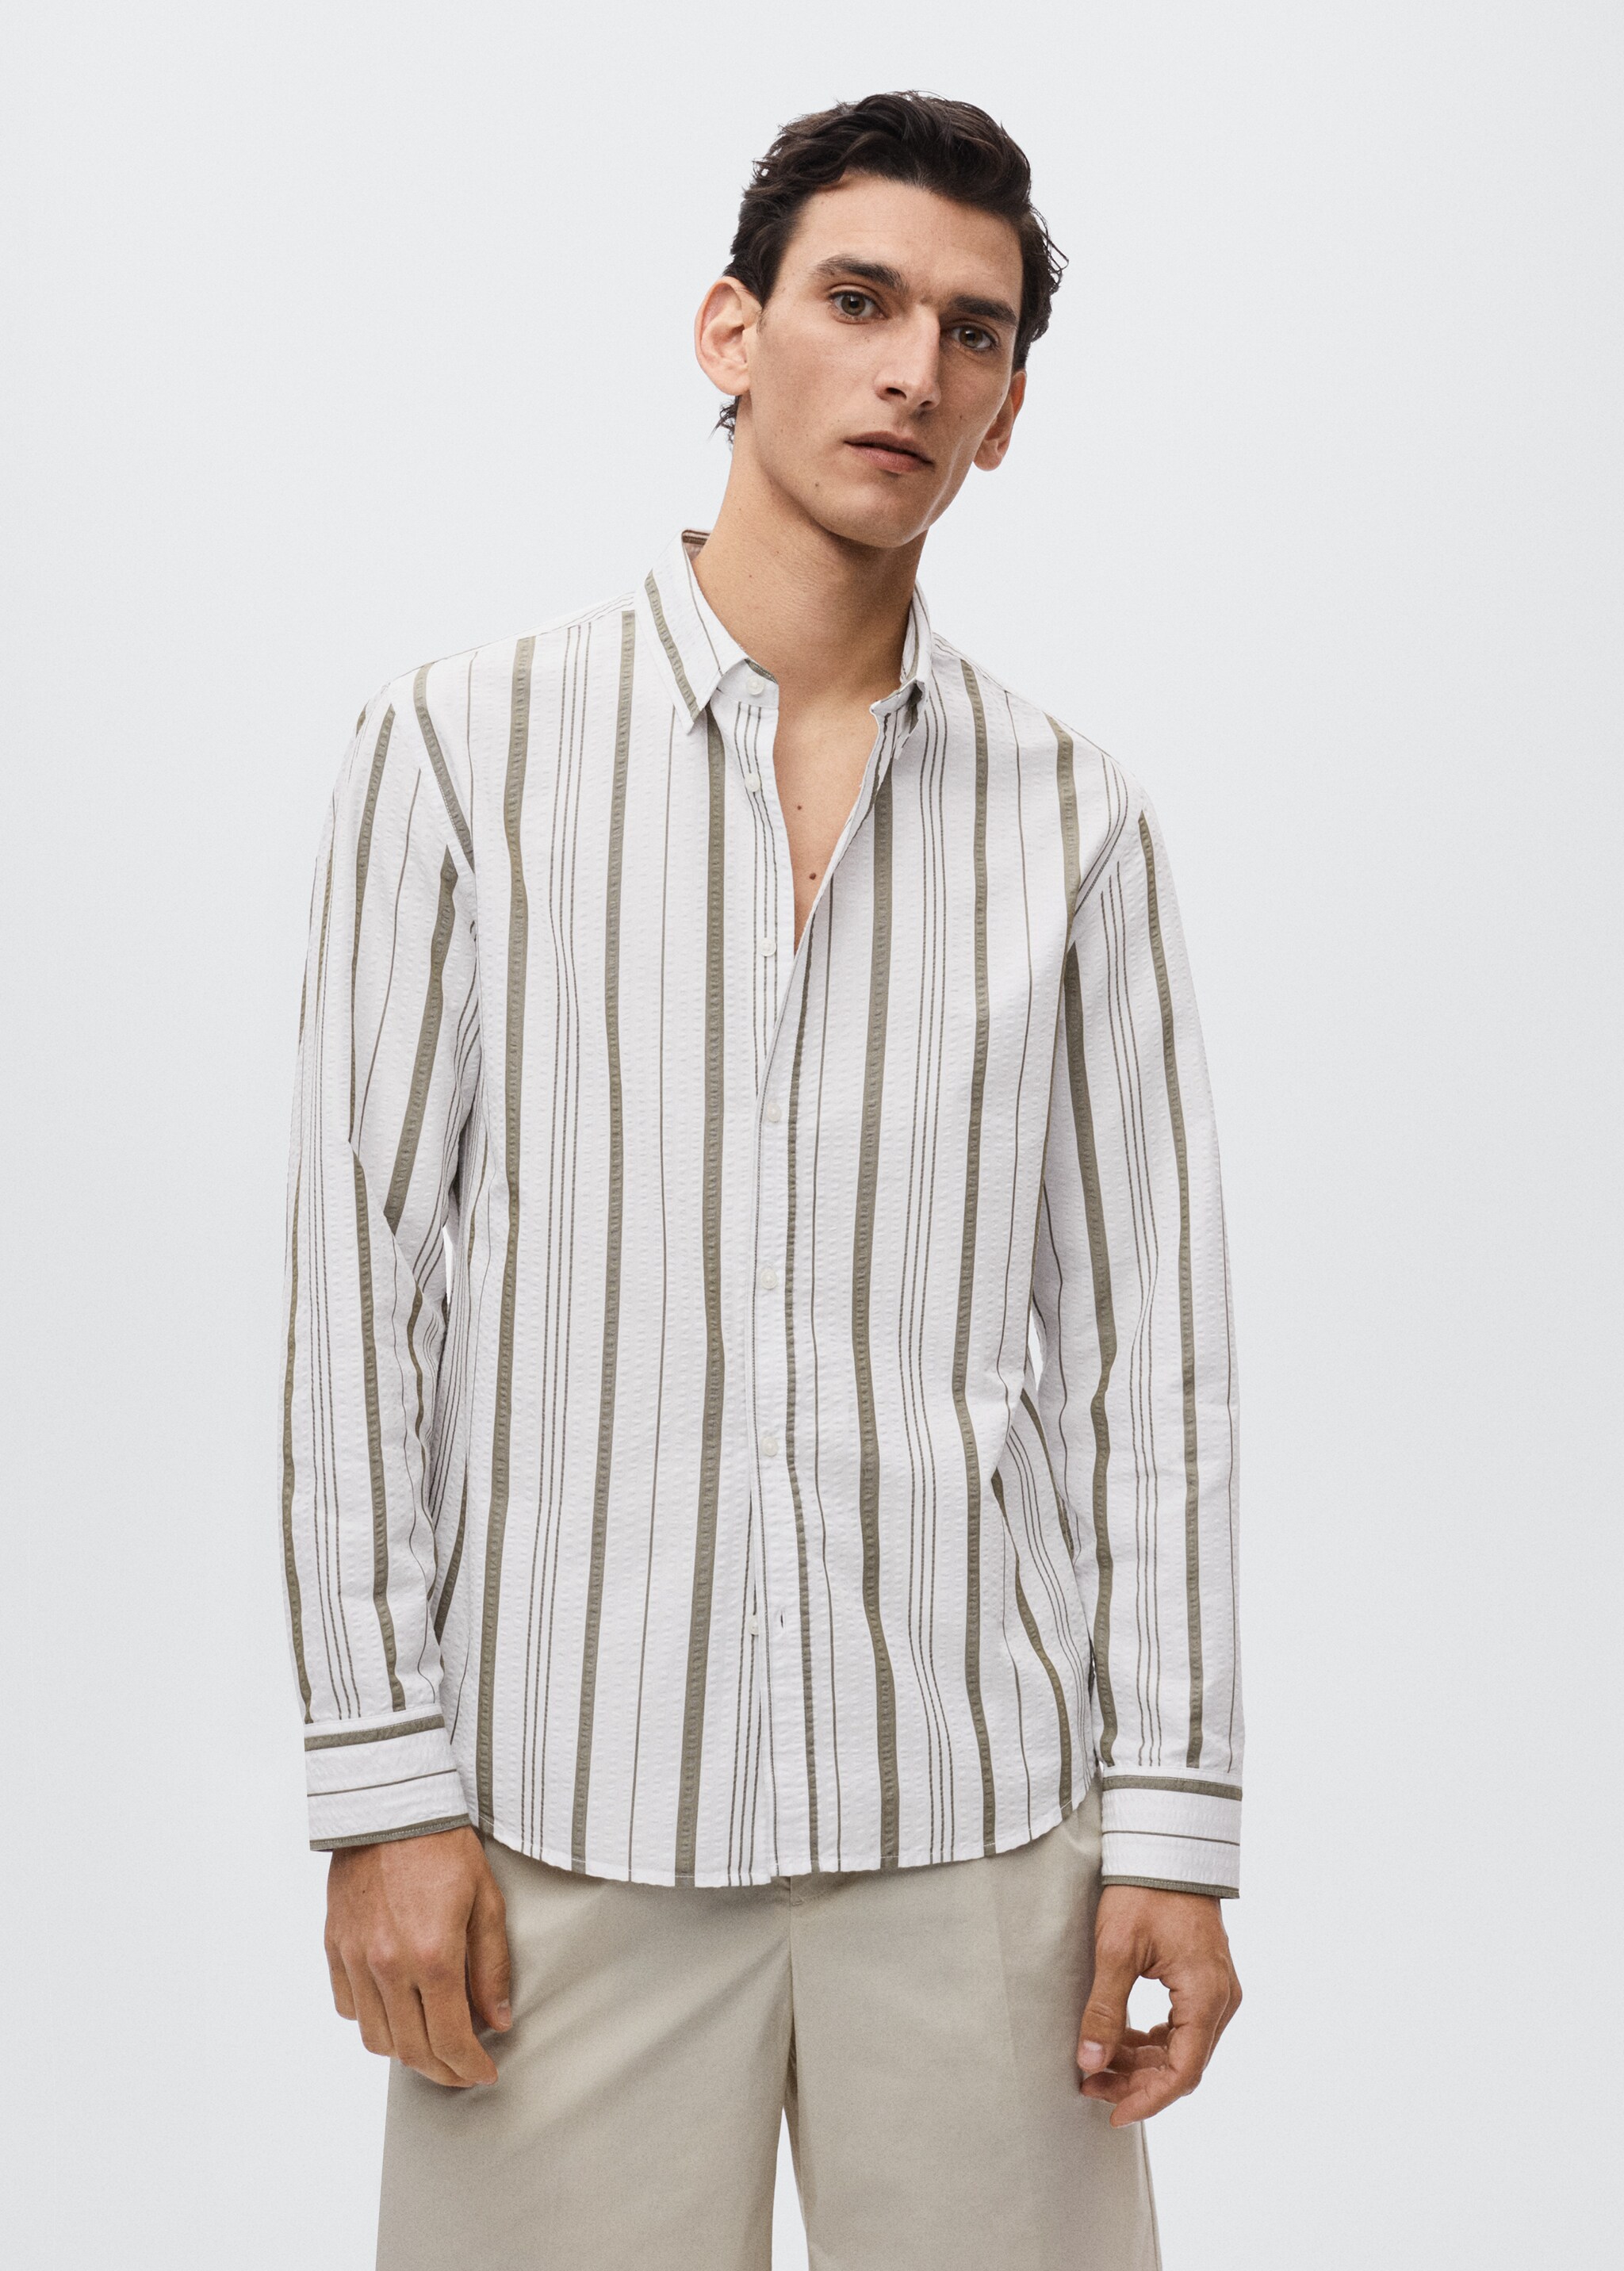 Striped seersucker shirt - Plan mediu